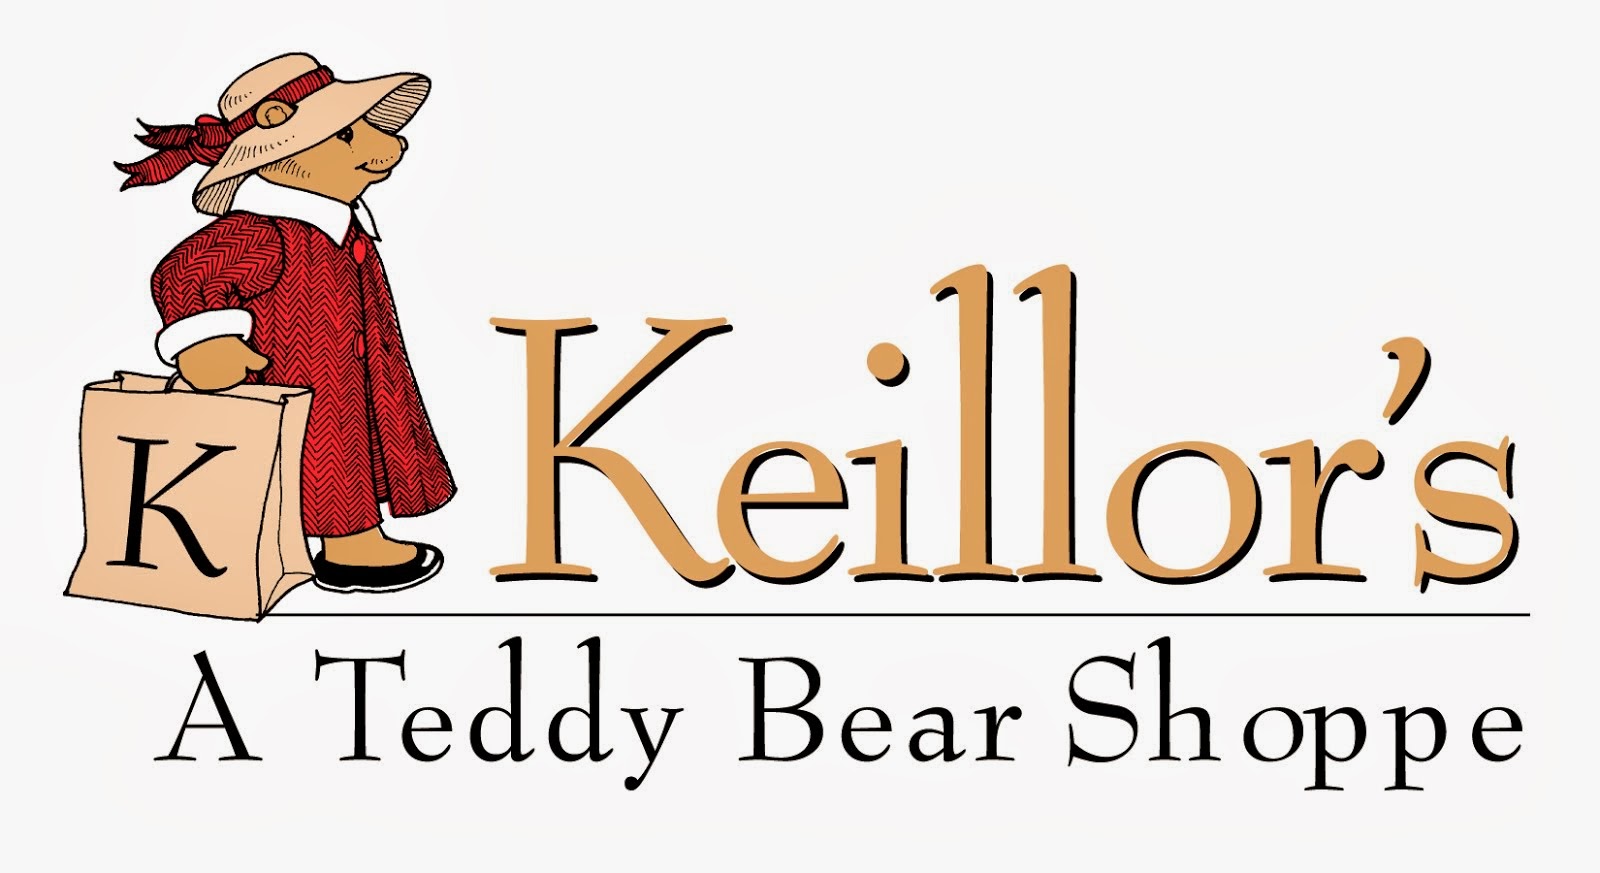 Stark County's Premier Teddy Bear Shoppe